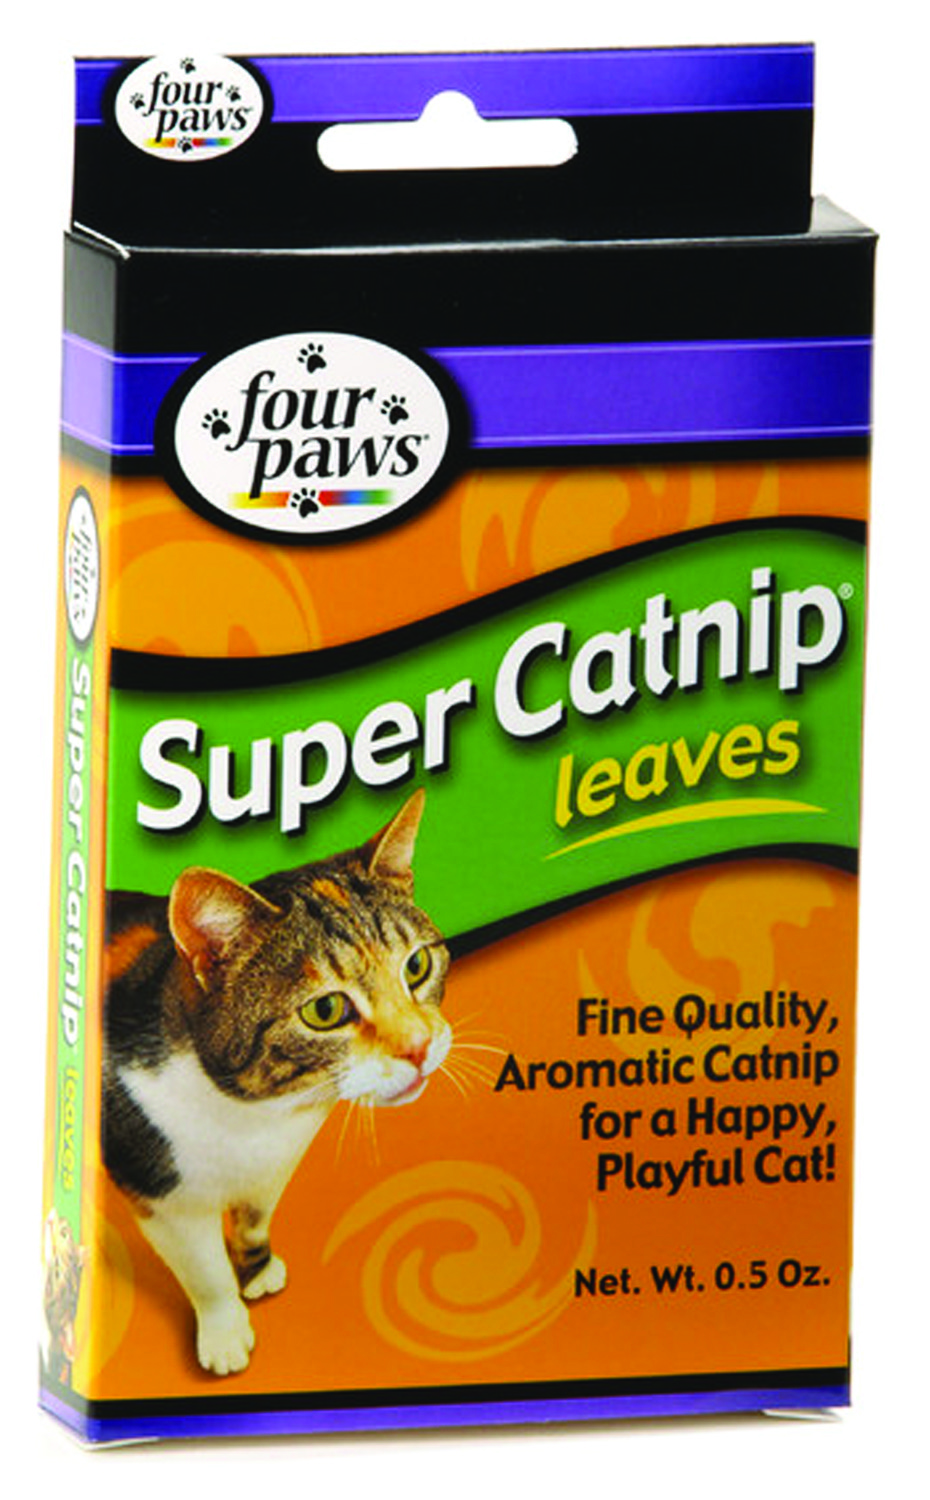 Super Catnip Leaves .5 Oz